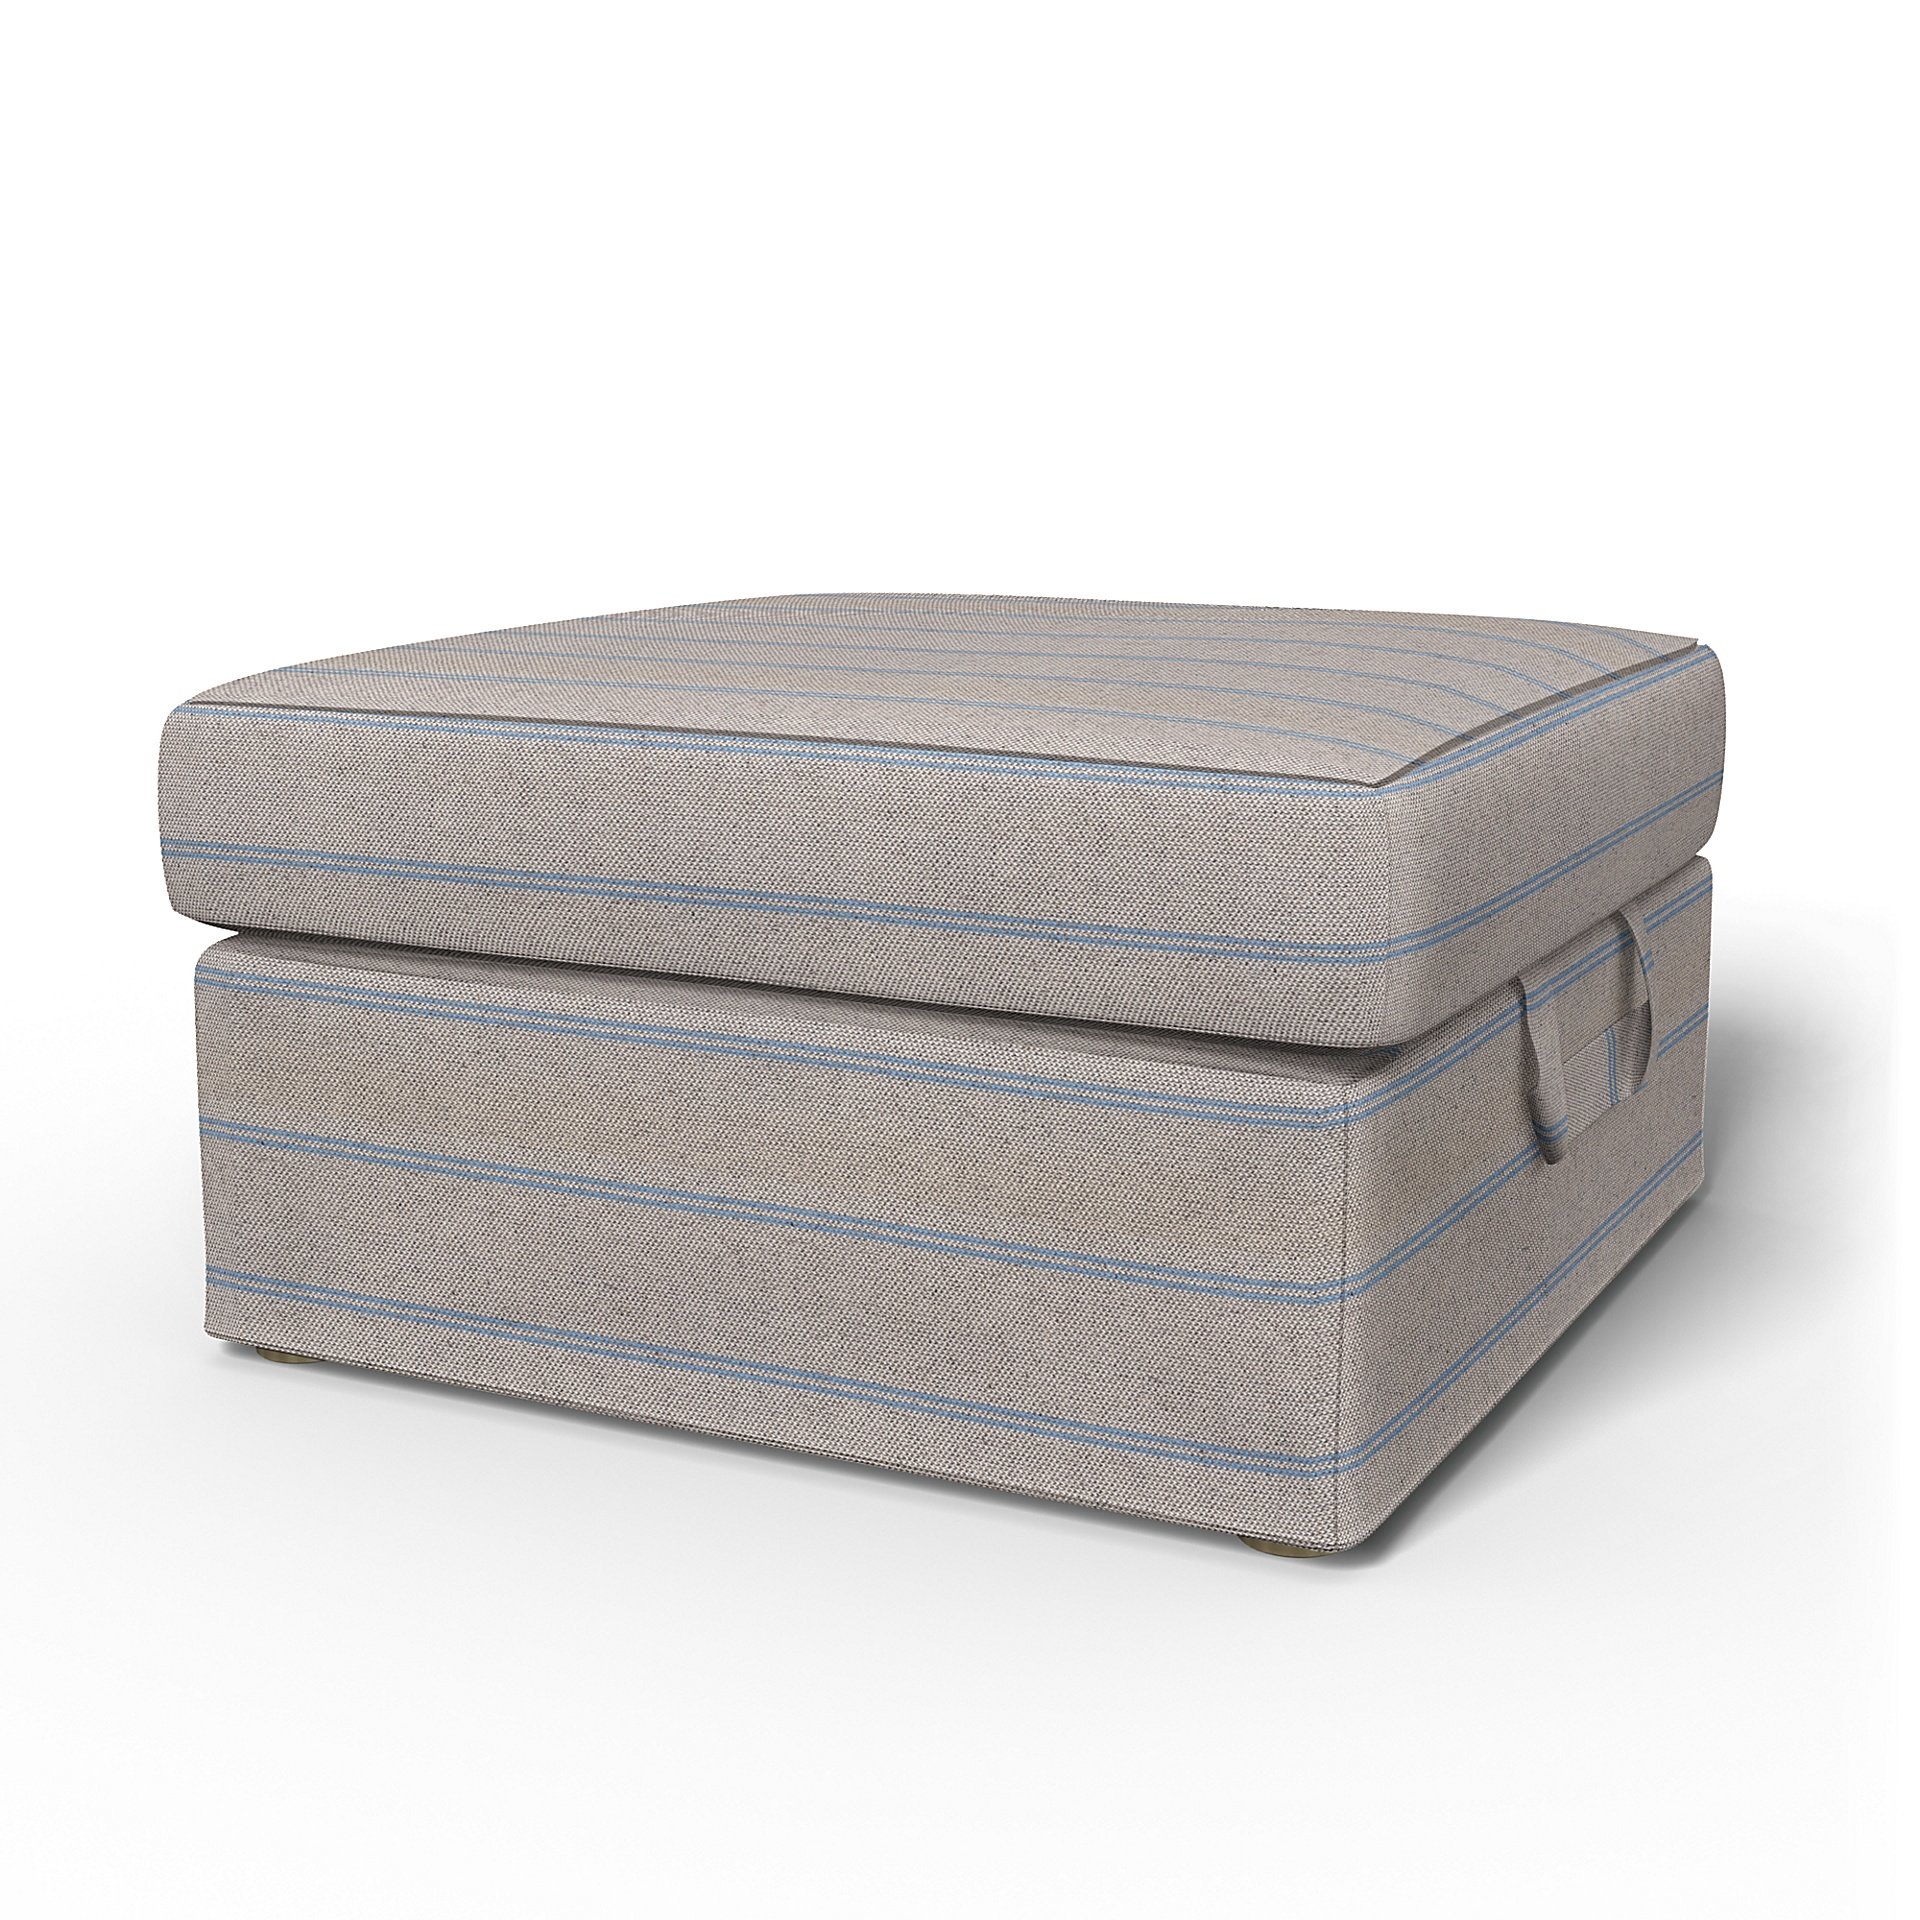 IKEA - Tomelilla Foto Footstool Cover, Blue Stripe, Cotton - Bemz